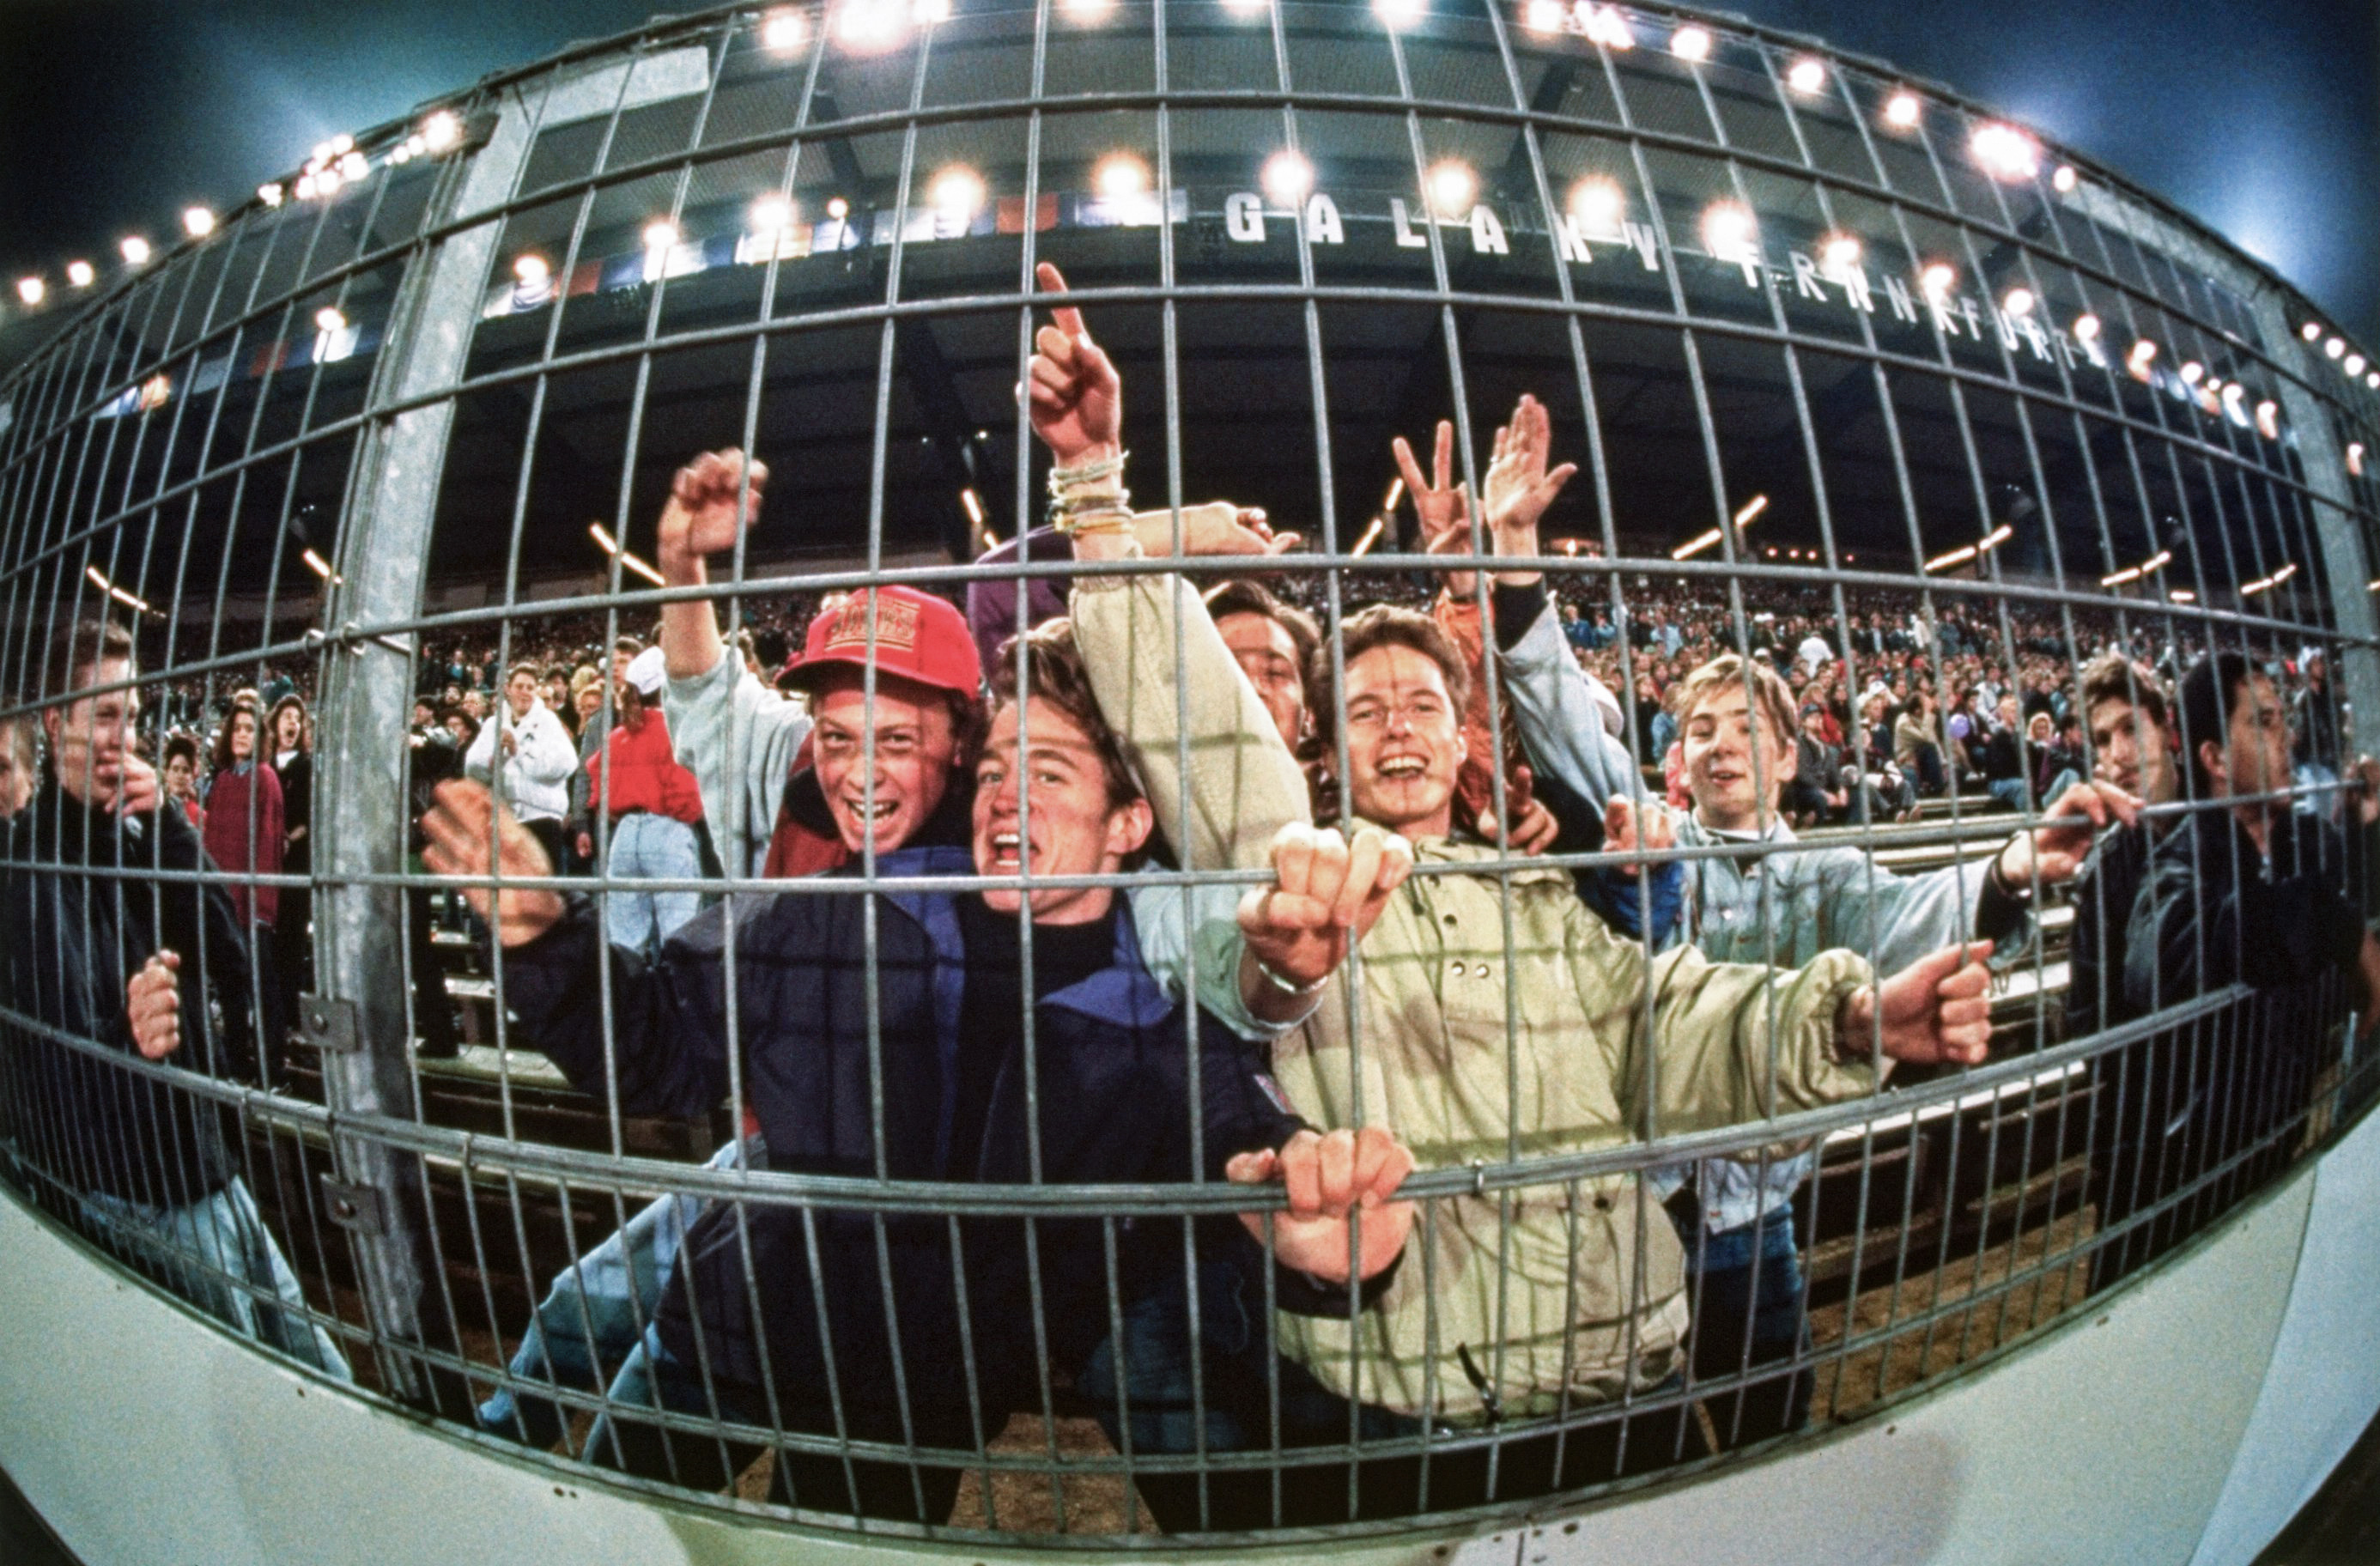 Frankfurt Galaxy fans at a game in 1991